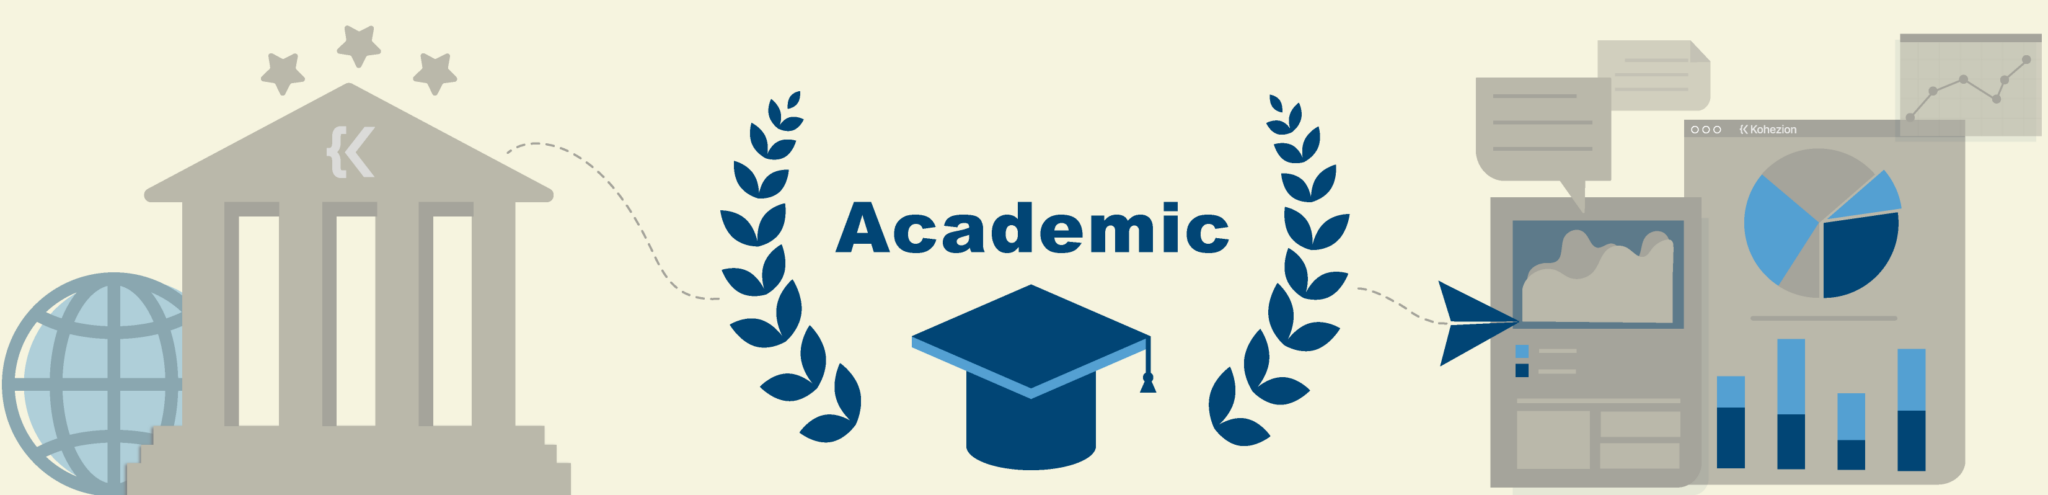 Academic-banner